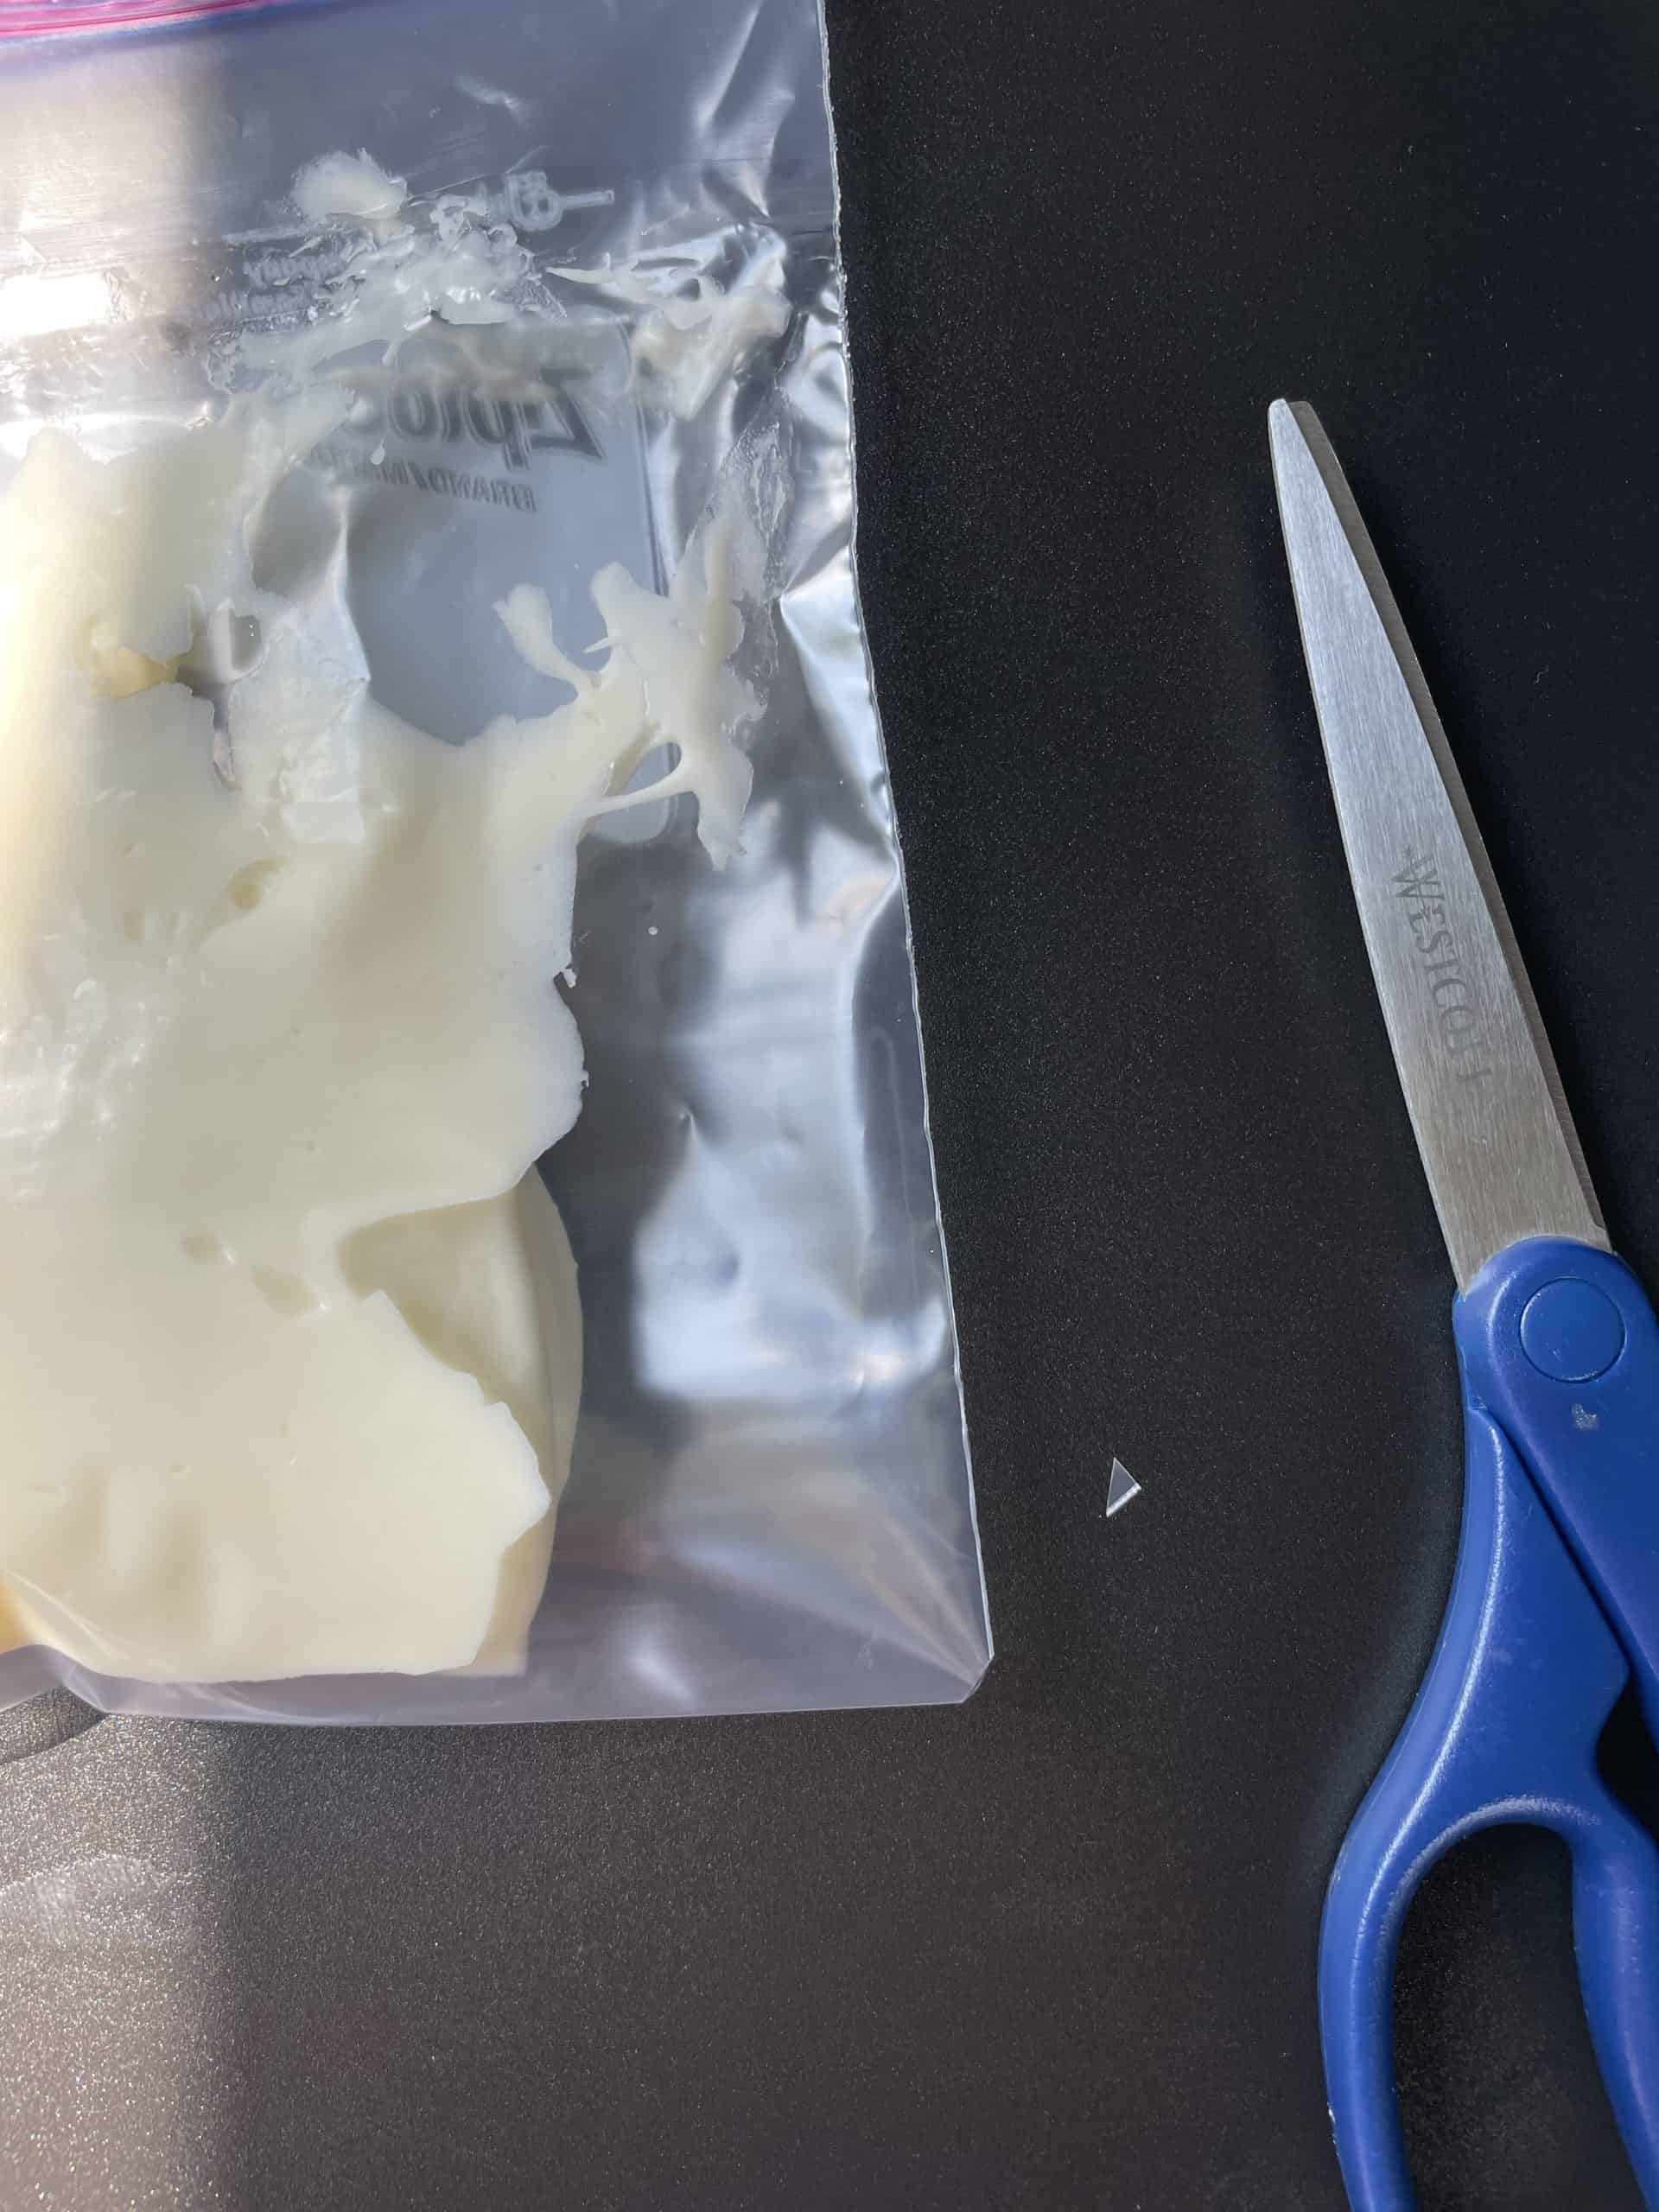 Cream Cheese Icing in a ziplock bag.